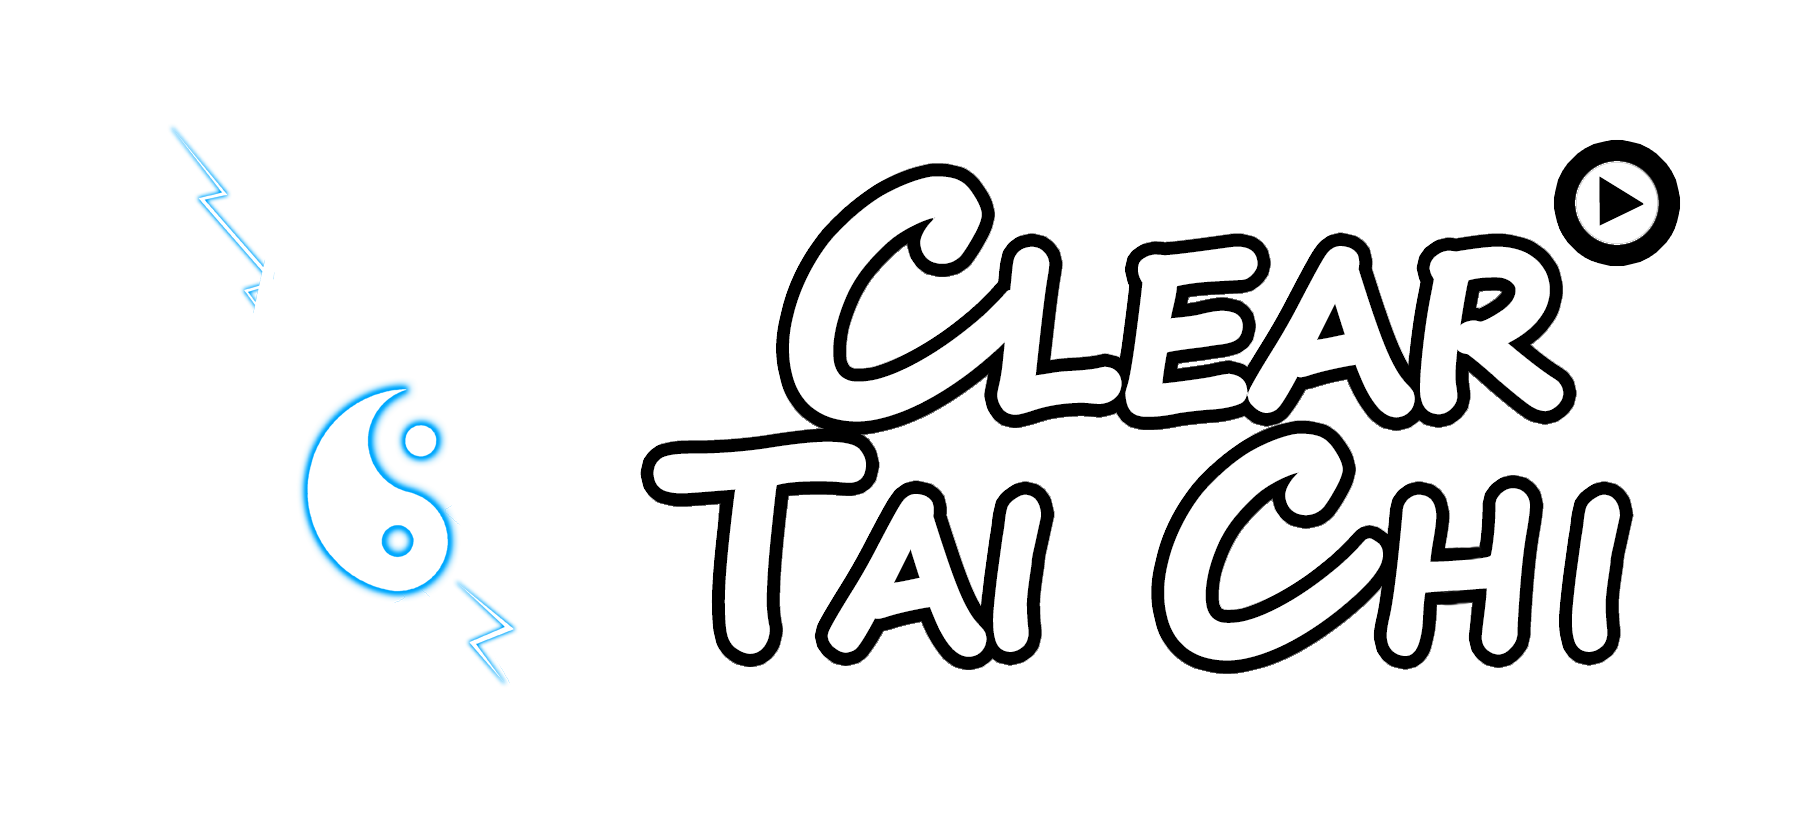 Clear's Tai Chi